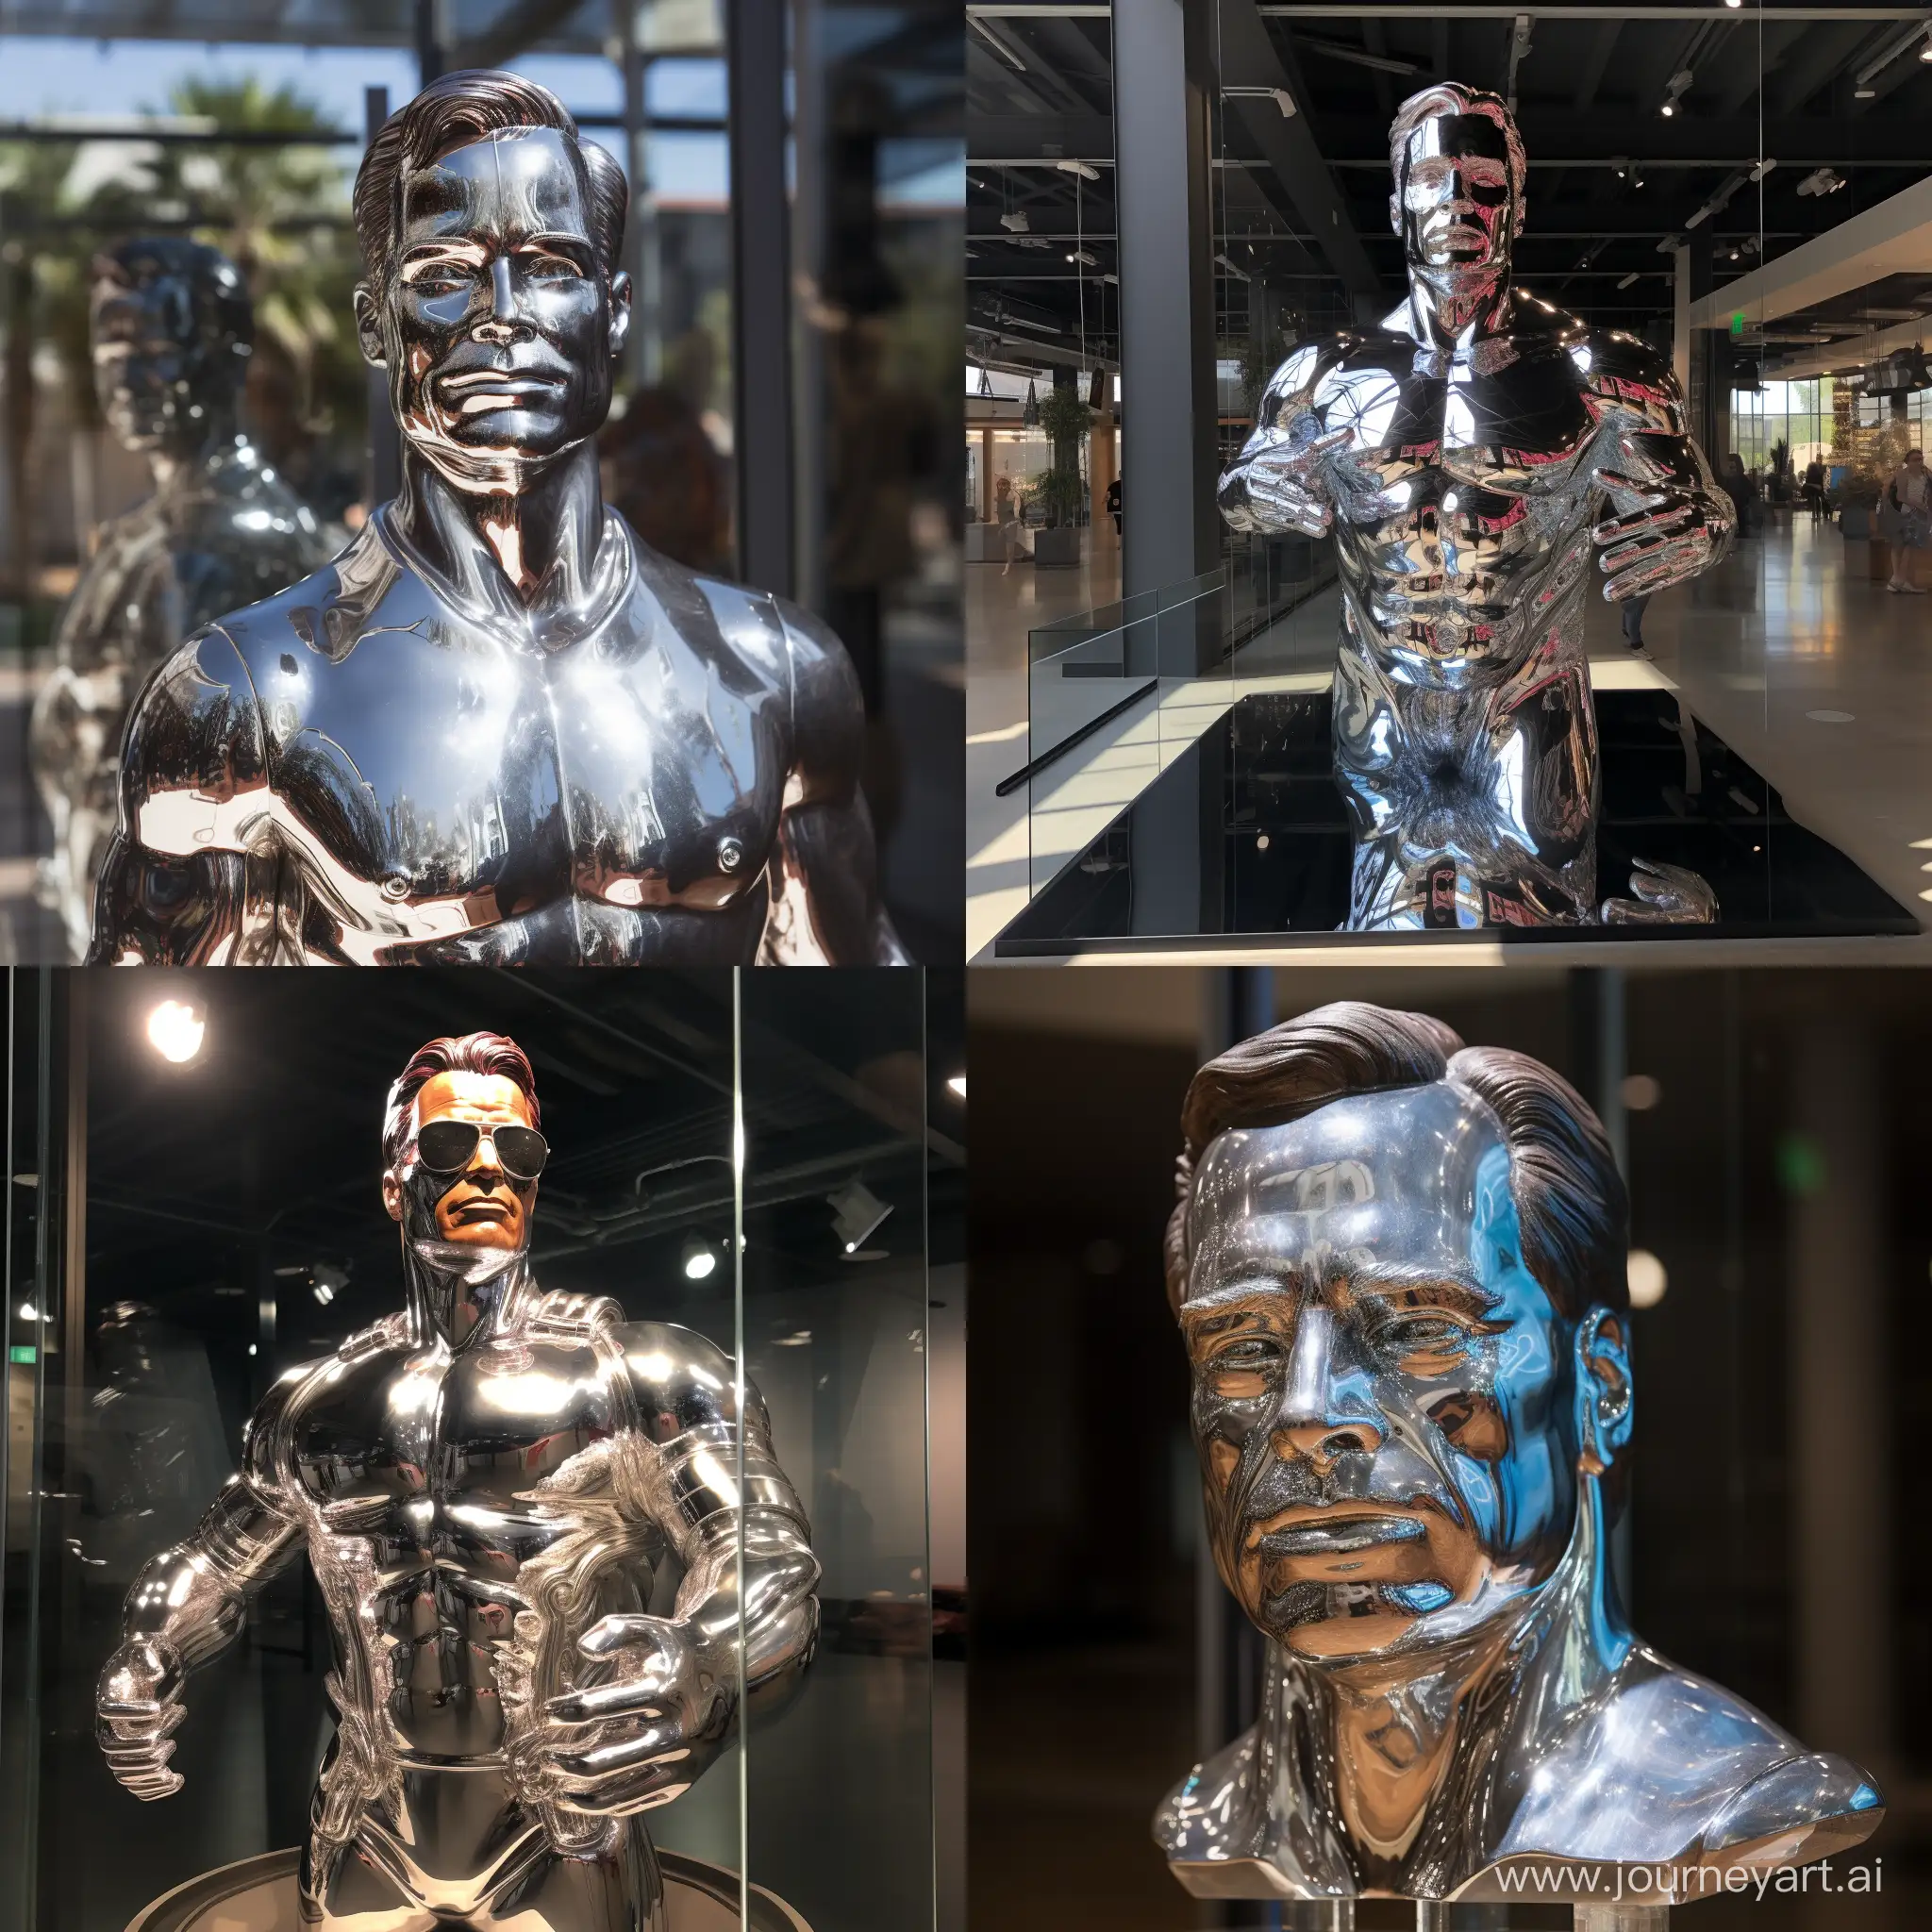 Impressive-Glass-and-Chrome-Arnold-Schwarzenegger-Statue-Reflecting-in-Striking-Detail